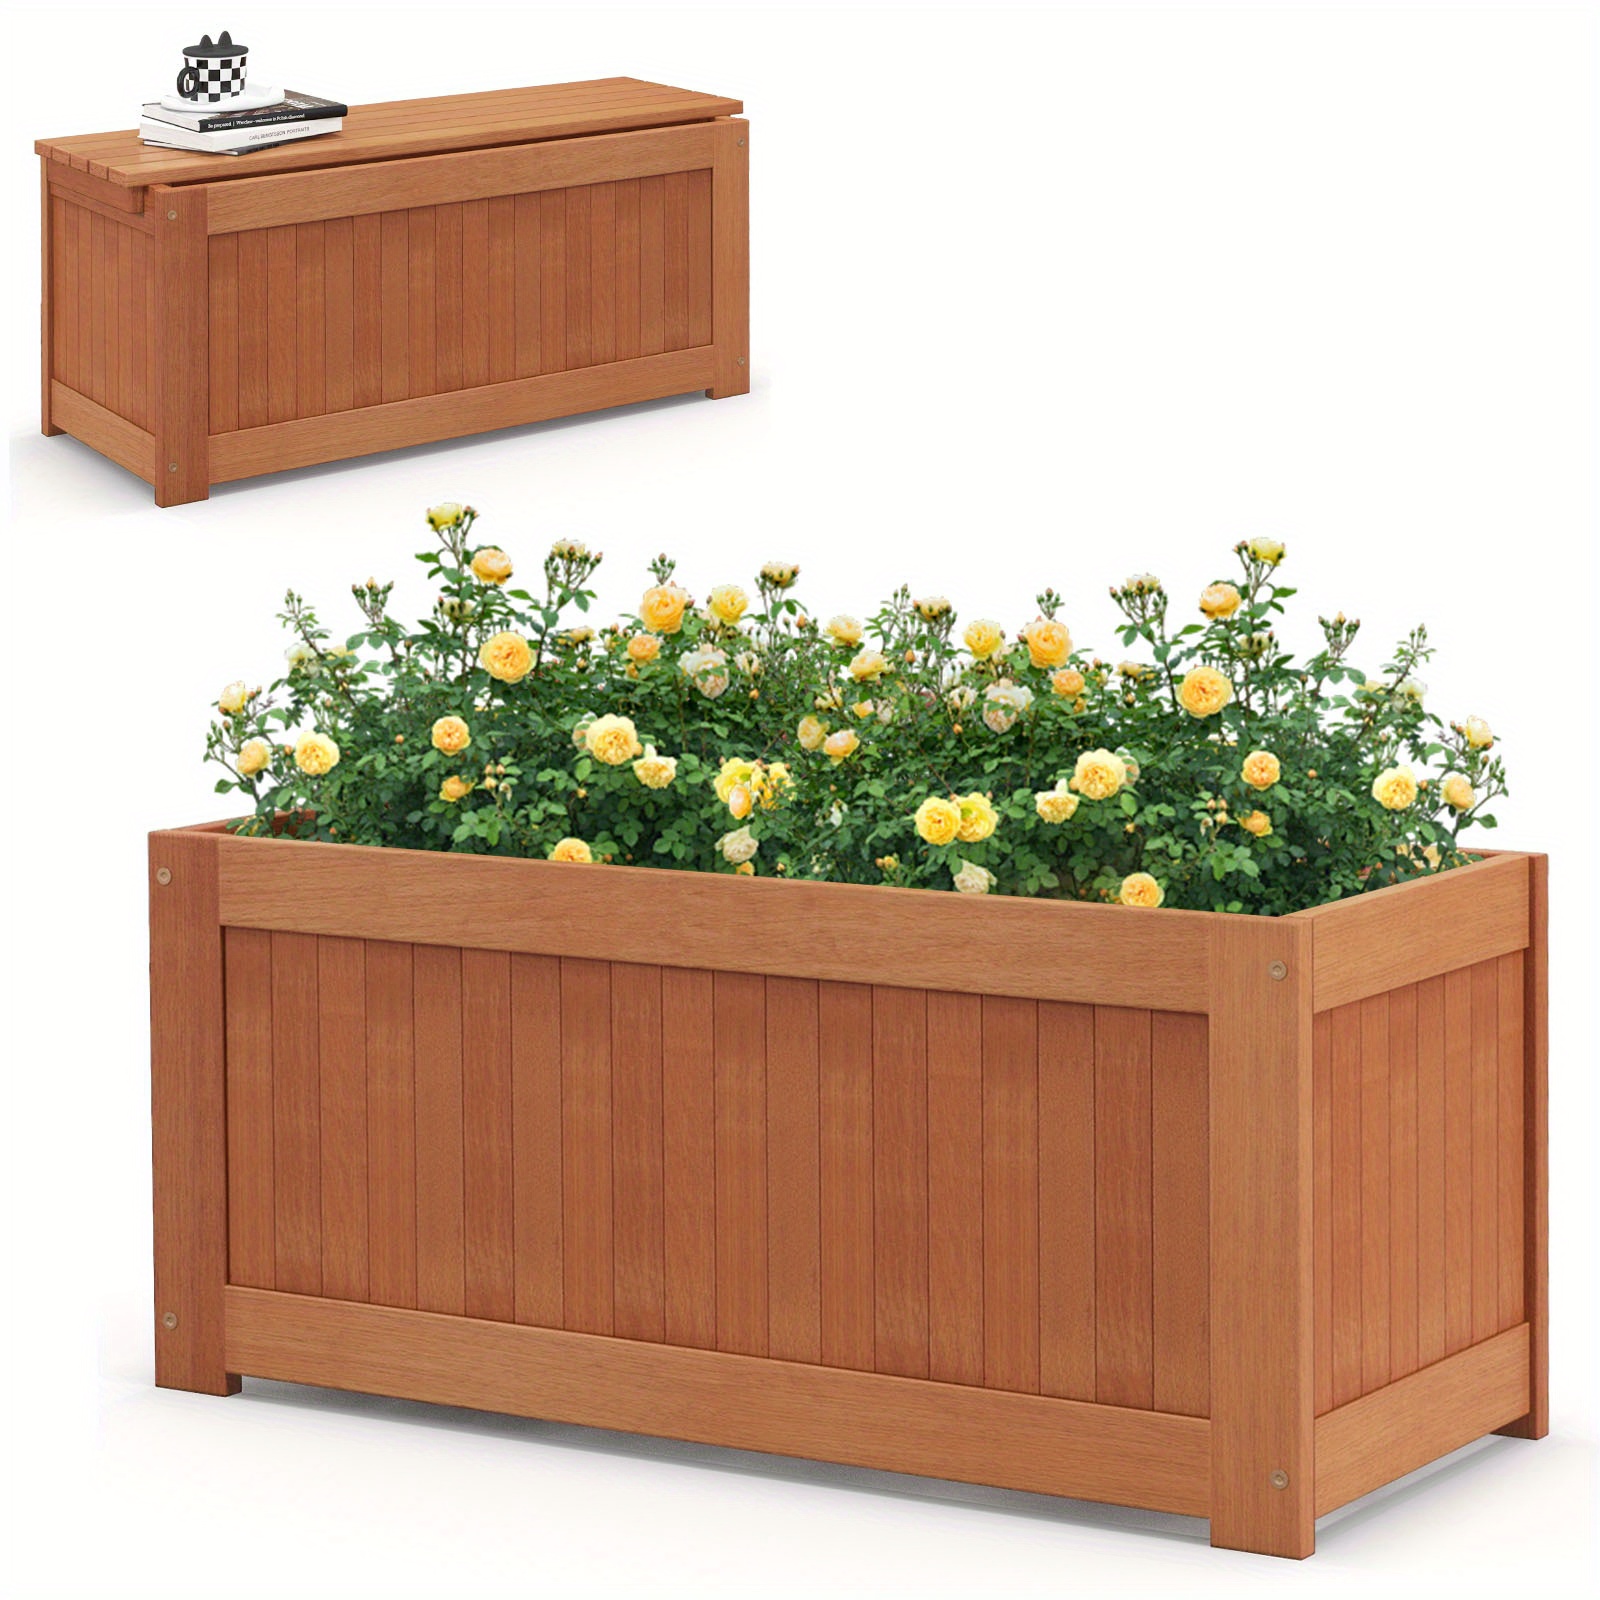 

Costway Wood Outdoor Planter Box W/ Seat 2-in-1 Wooden Raised Garden Bed & Bench